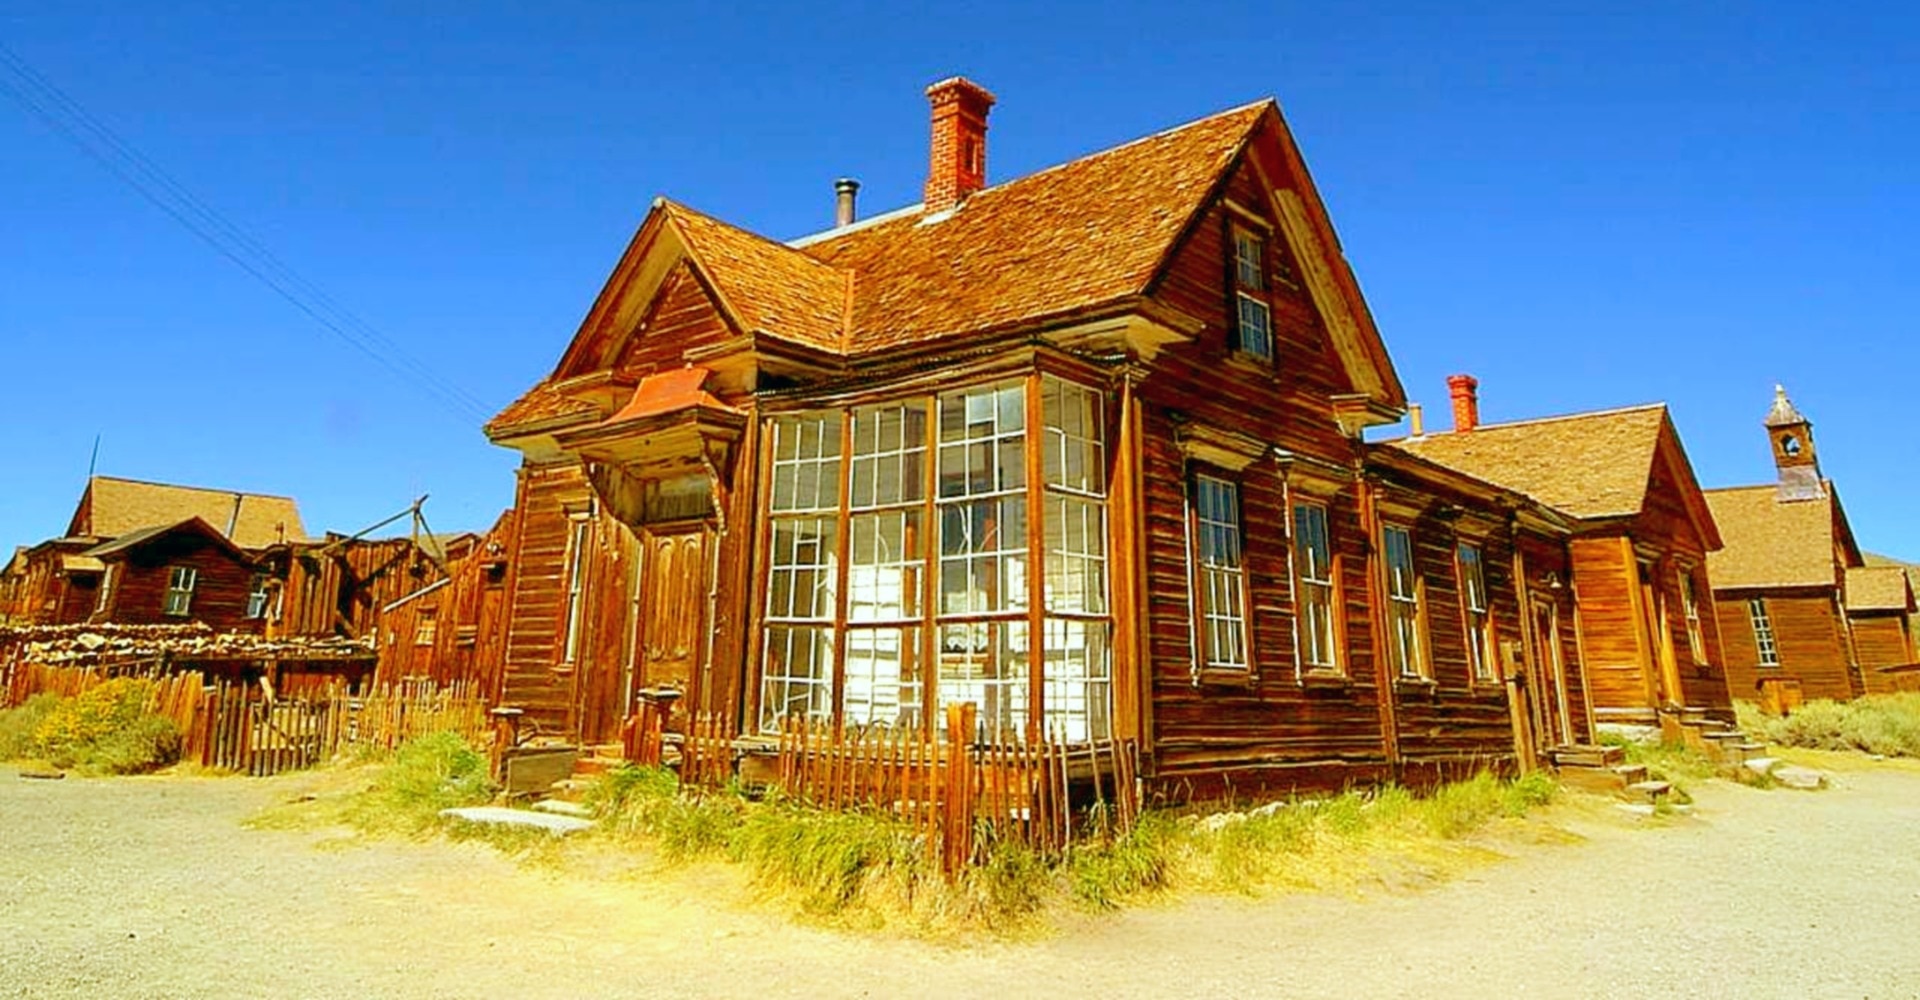 brown wooden house under blue skies during daytime